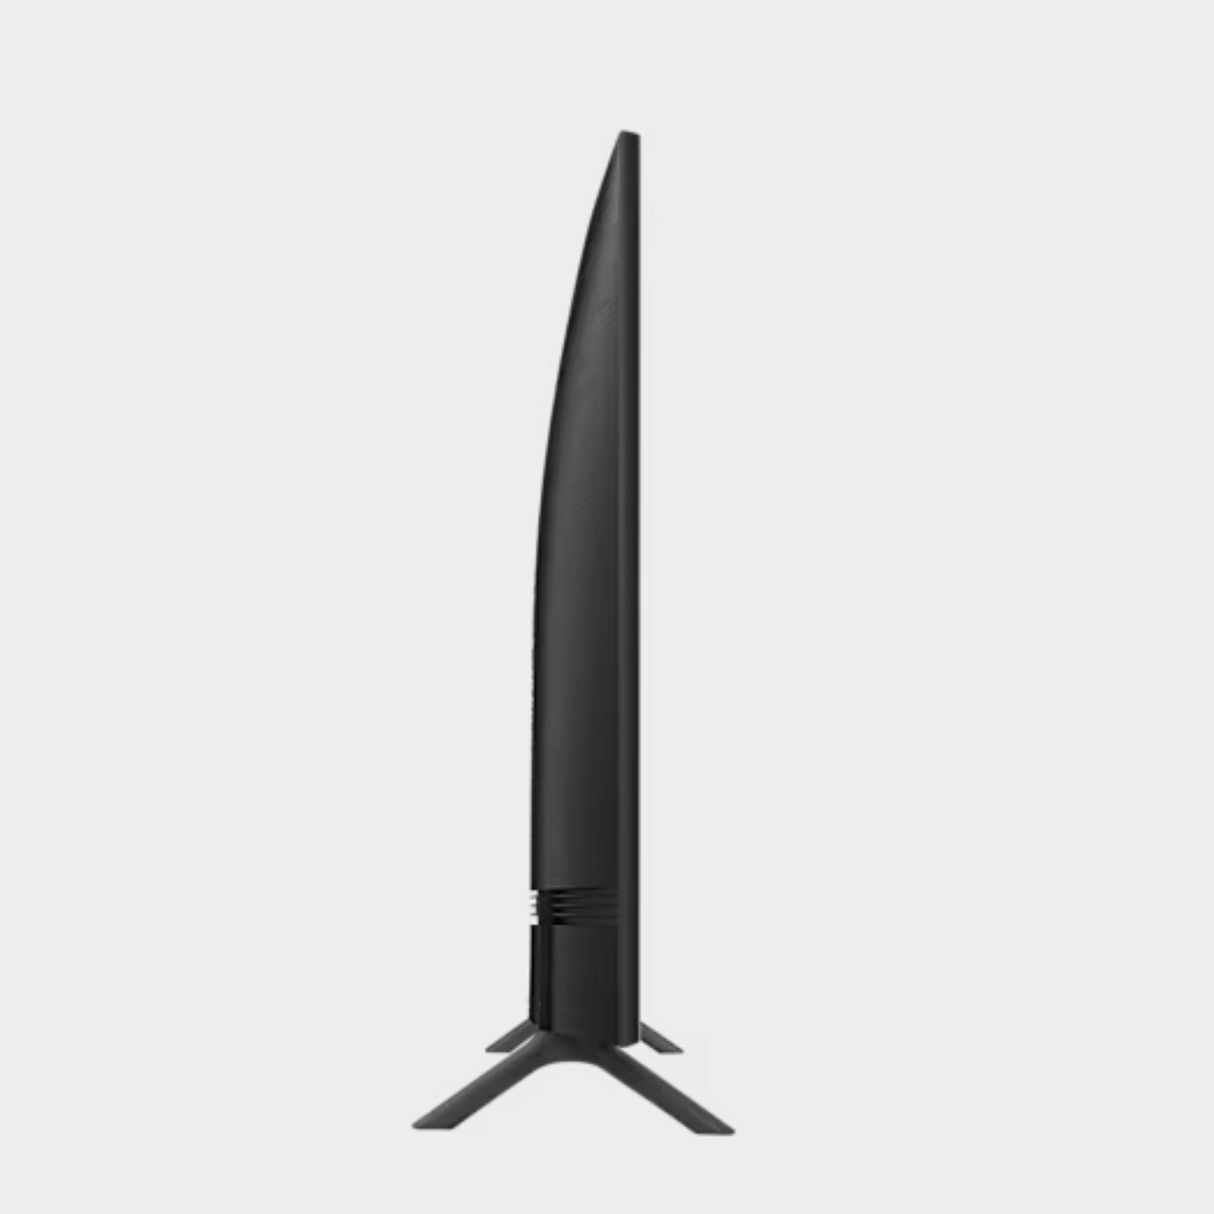 Samsung 49" Curved 4K UHD Smart TV UA49RU7300, Curved Screen, Bluetooth, HDMI With Inbuilt Digital Receiver – Black